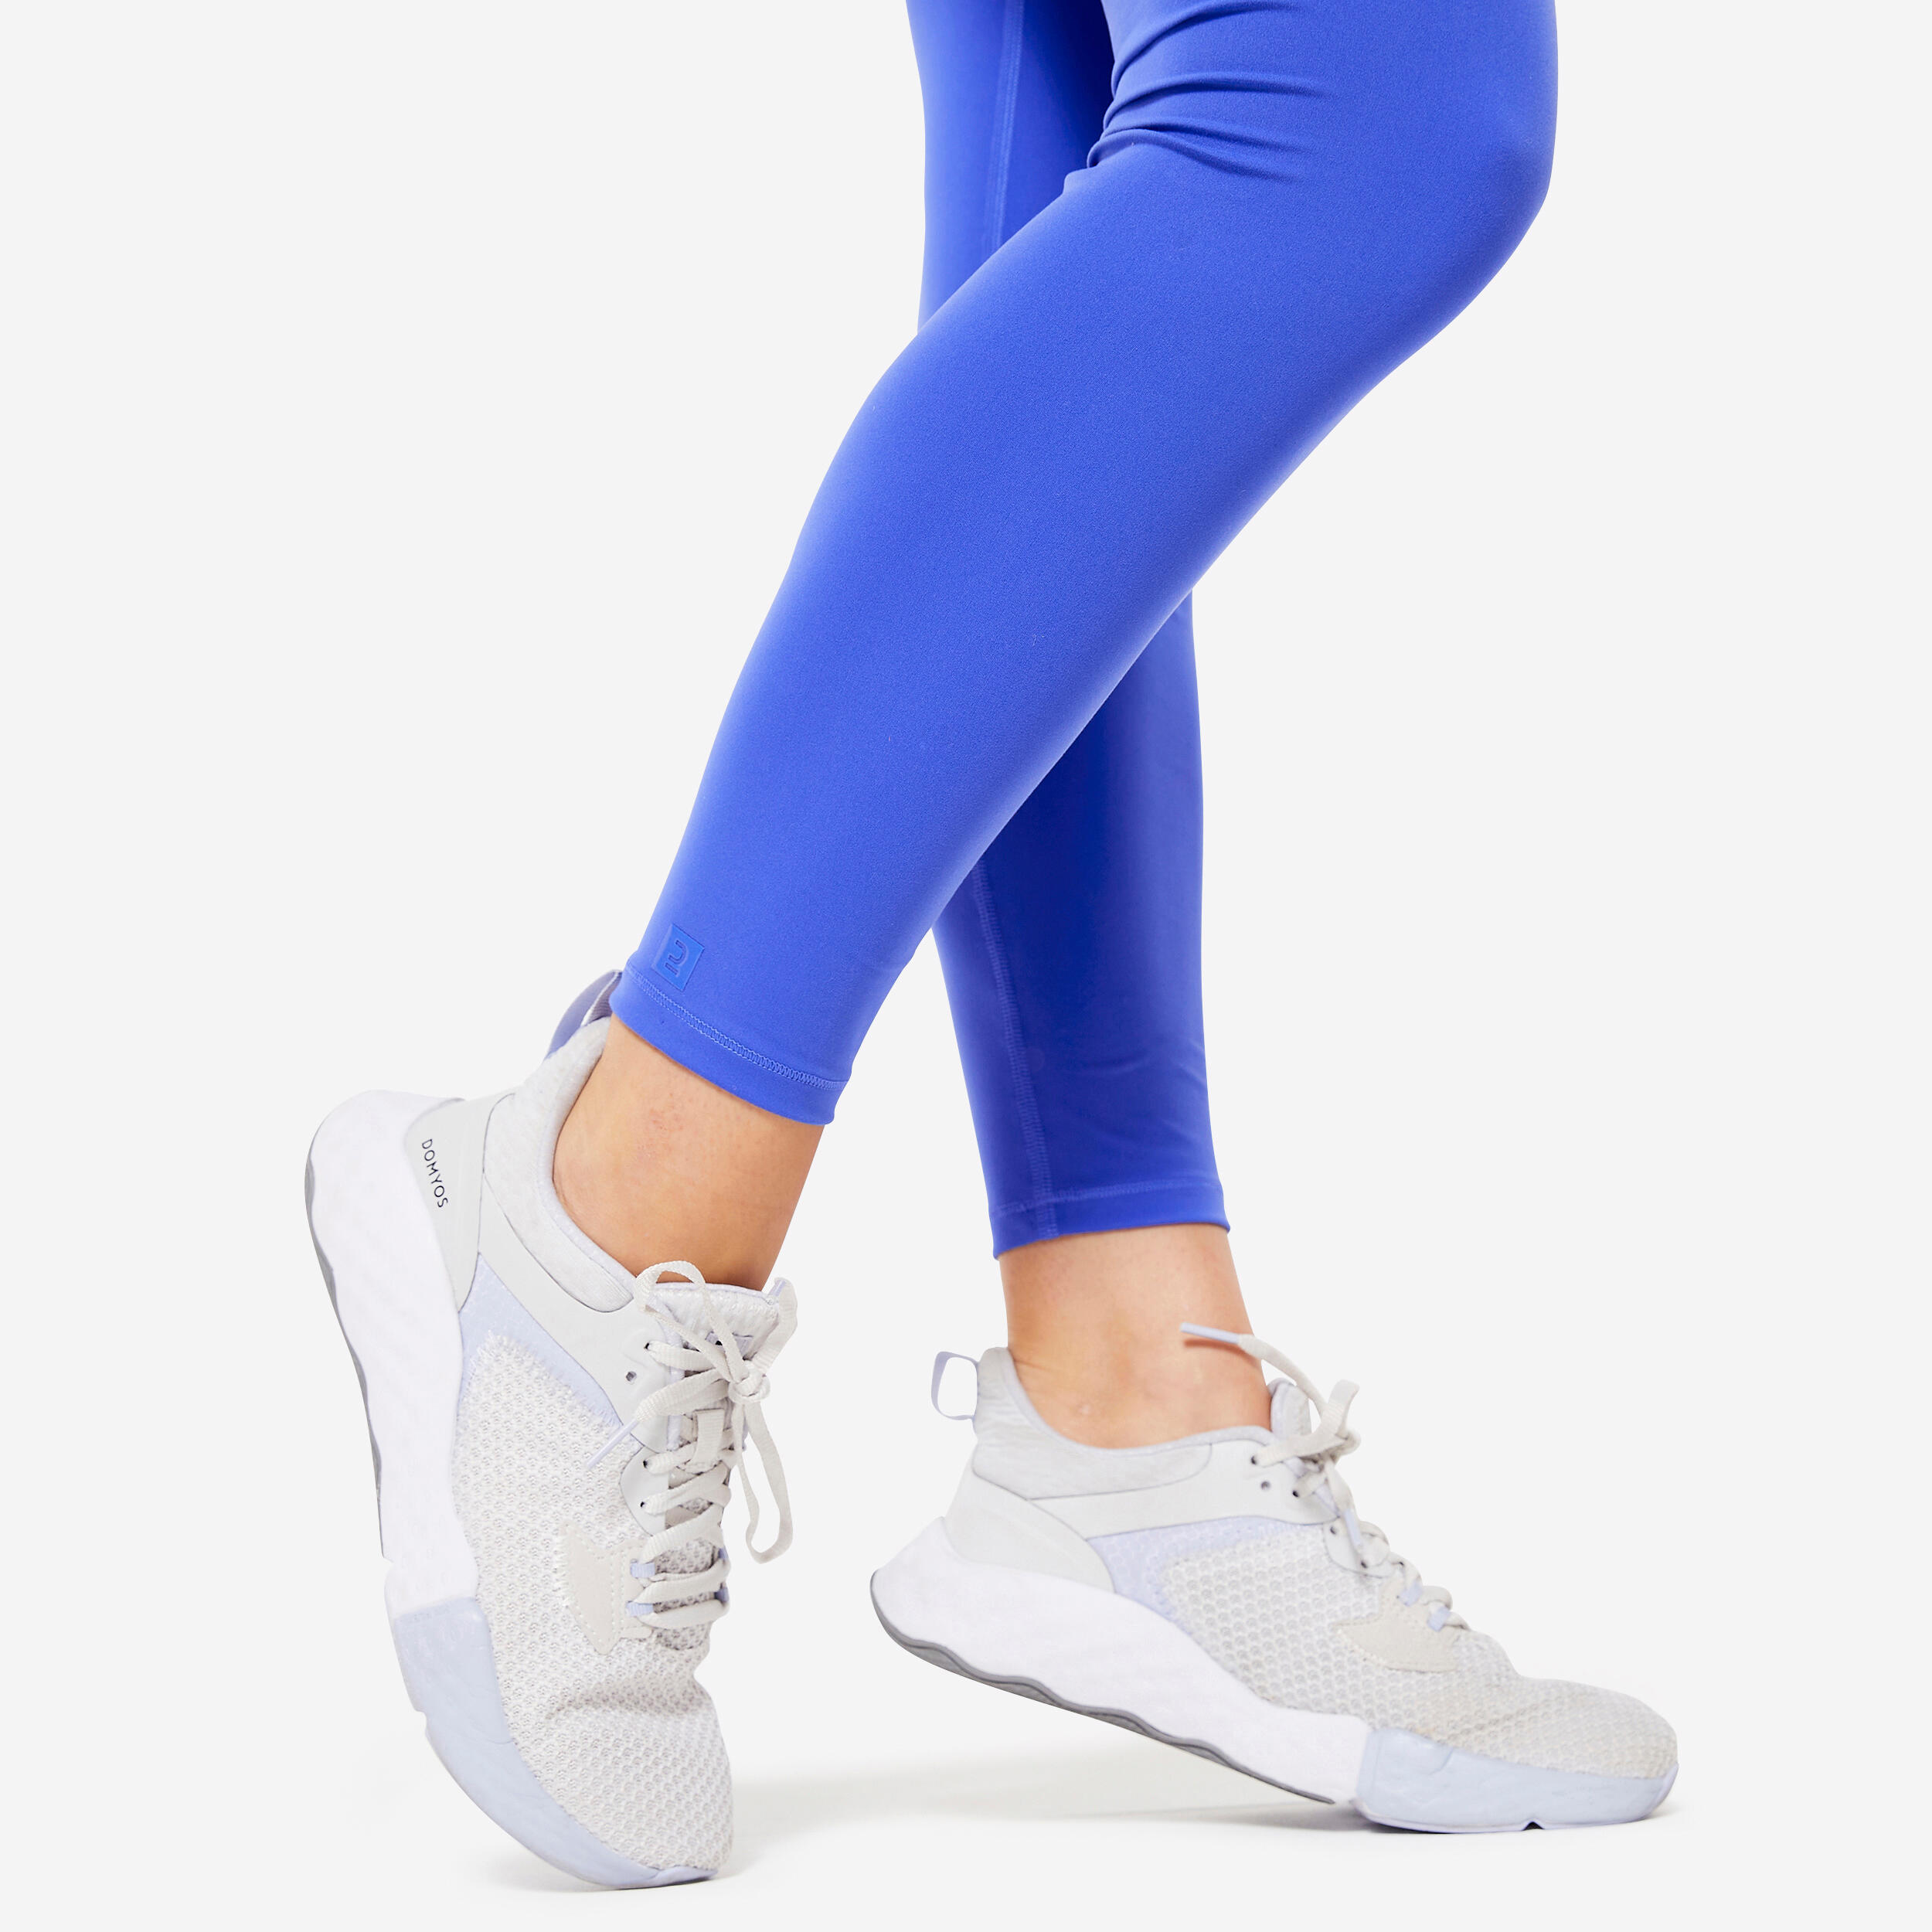 Women's Cardio Training Comfortable and Soft Long Leggings - Blue 6/6